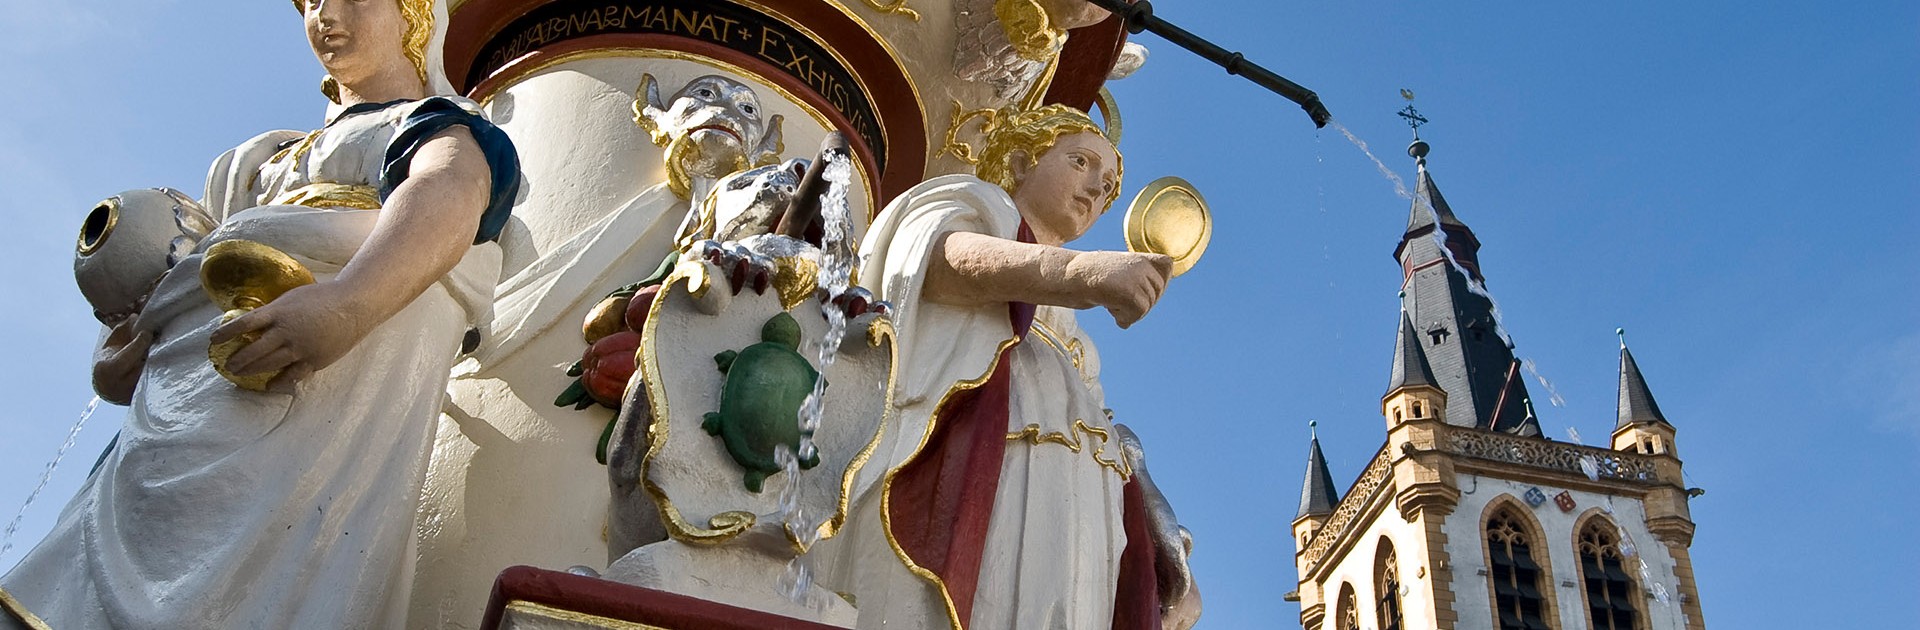 Saint Peter fountain